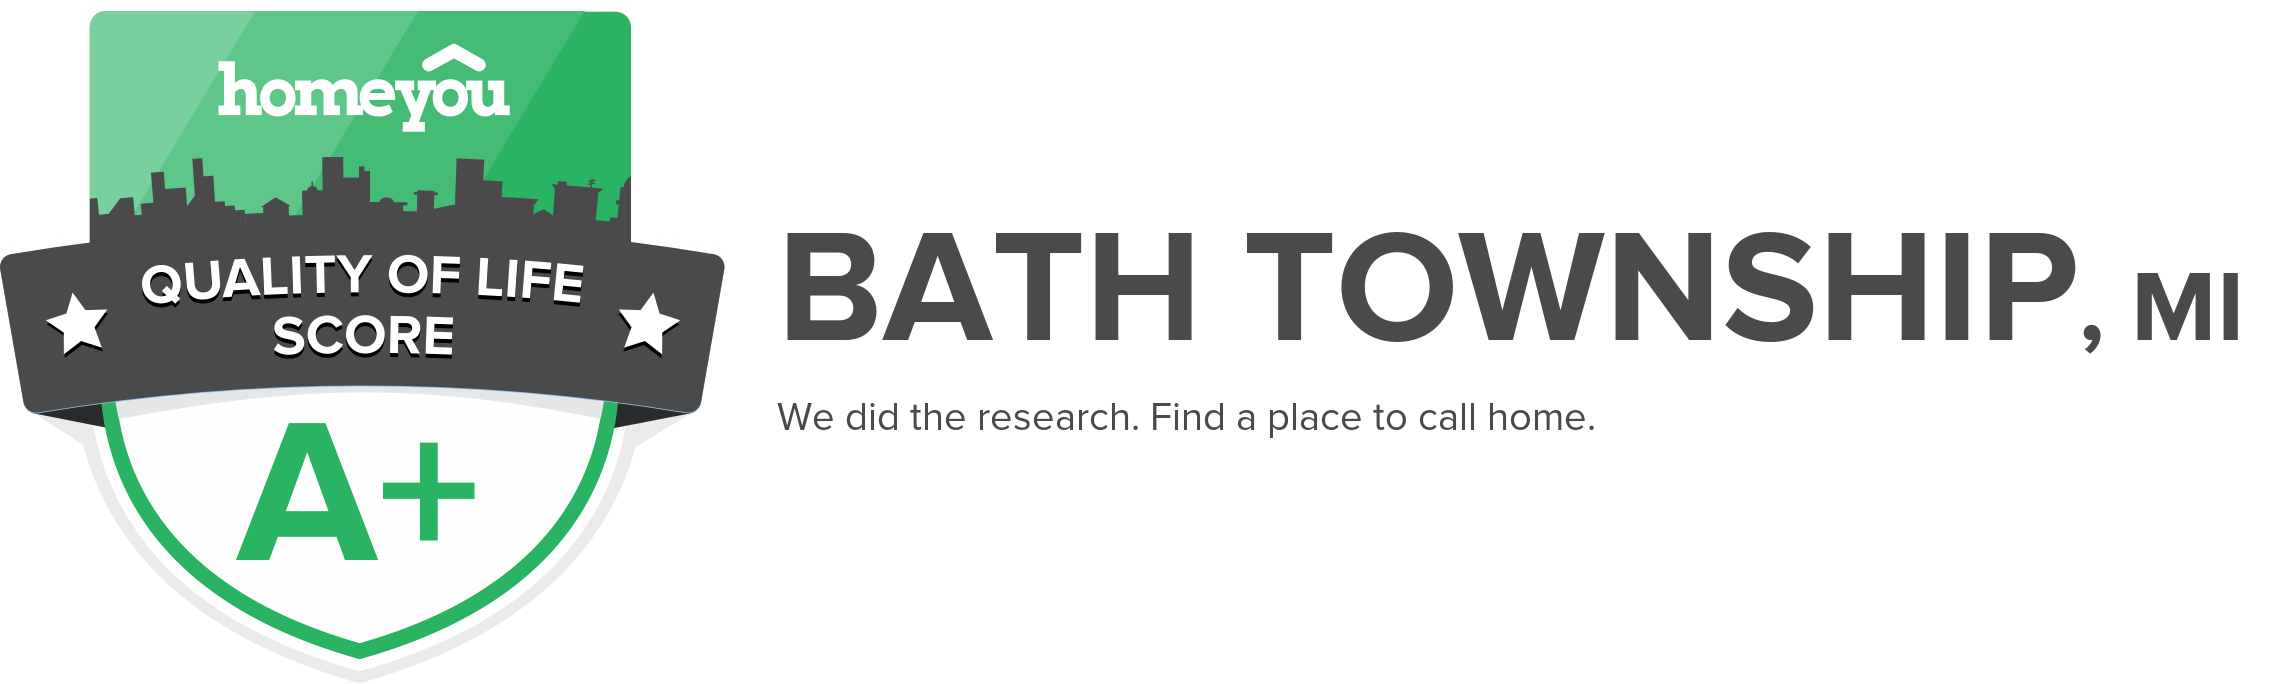 Bath township, MI